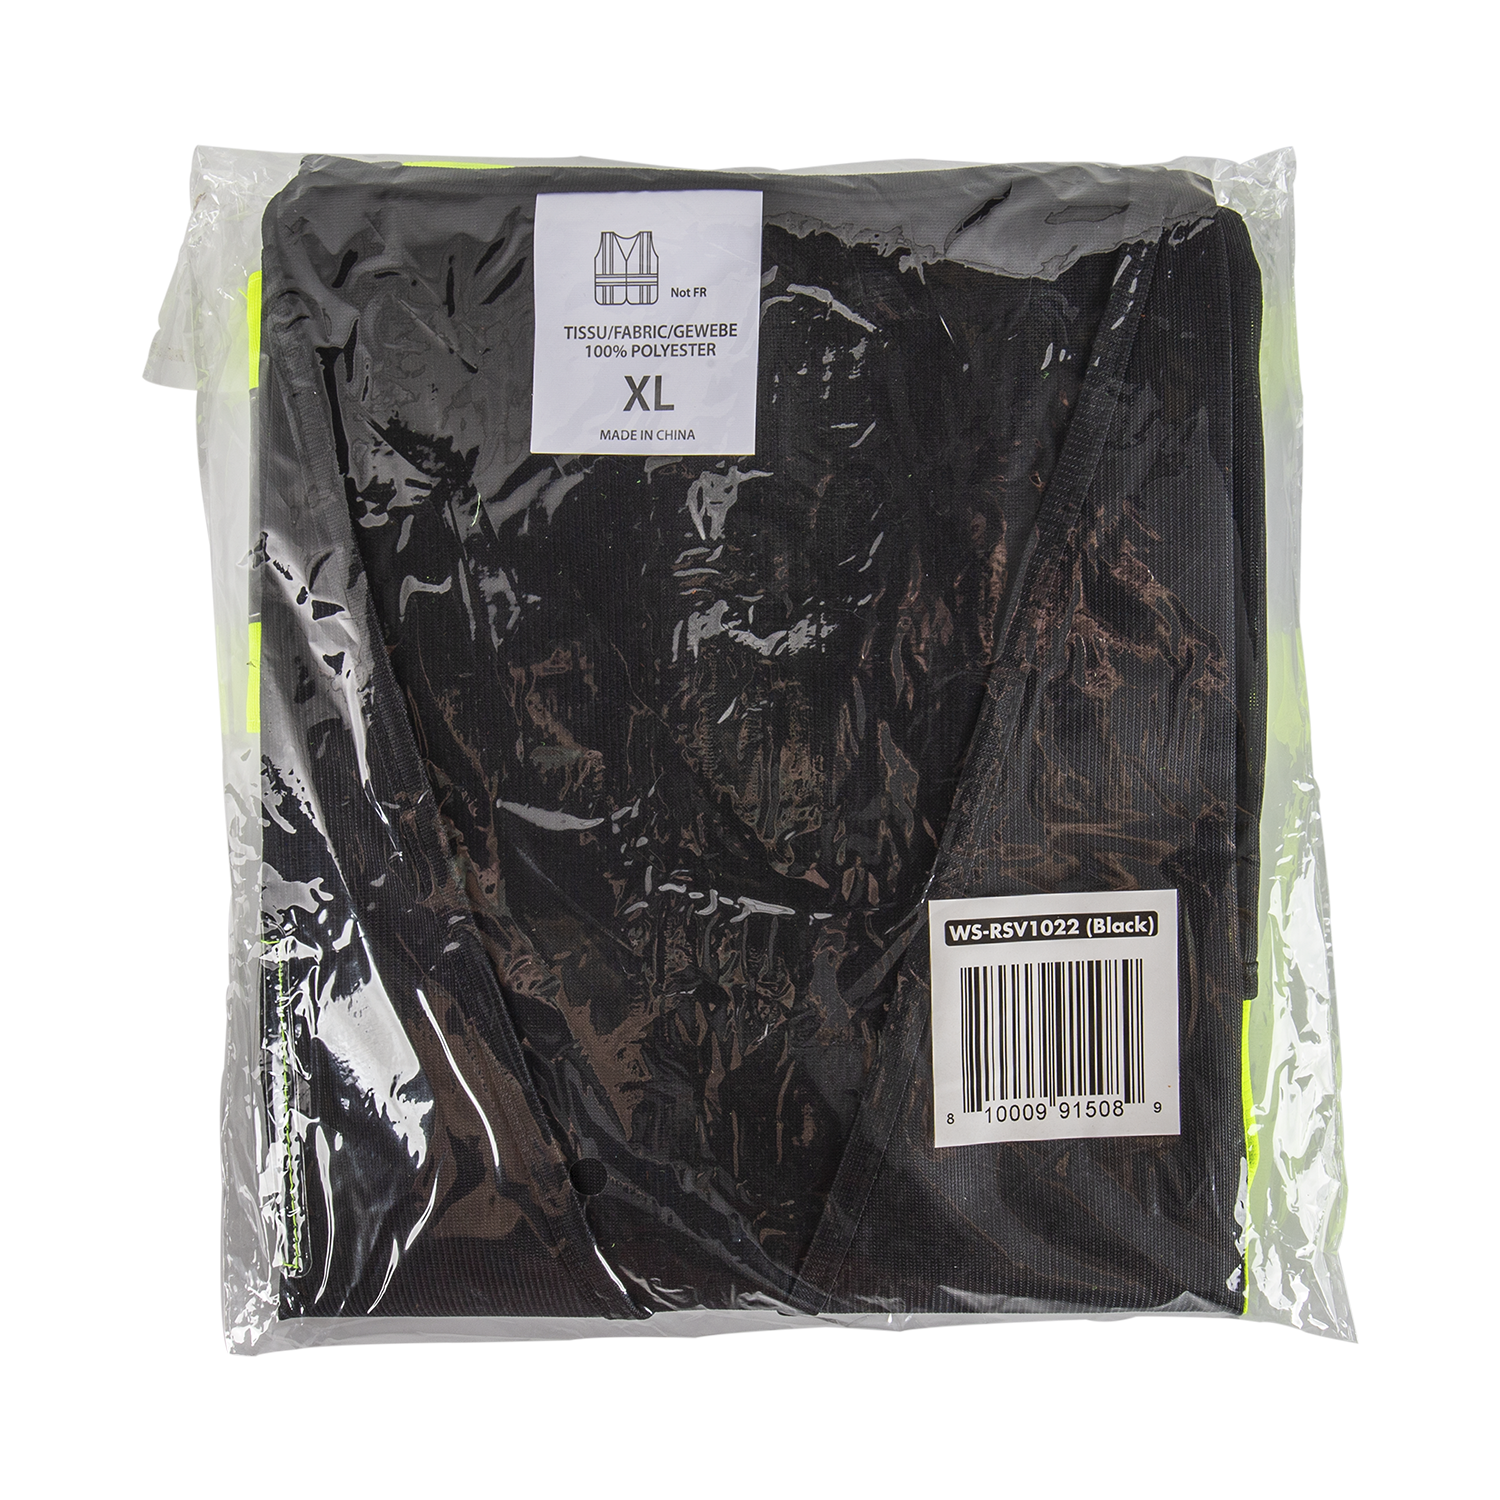 Karat High Visibility Reflective Safety Vest with Zipper Fastening (Black), X-Large - 1 pc